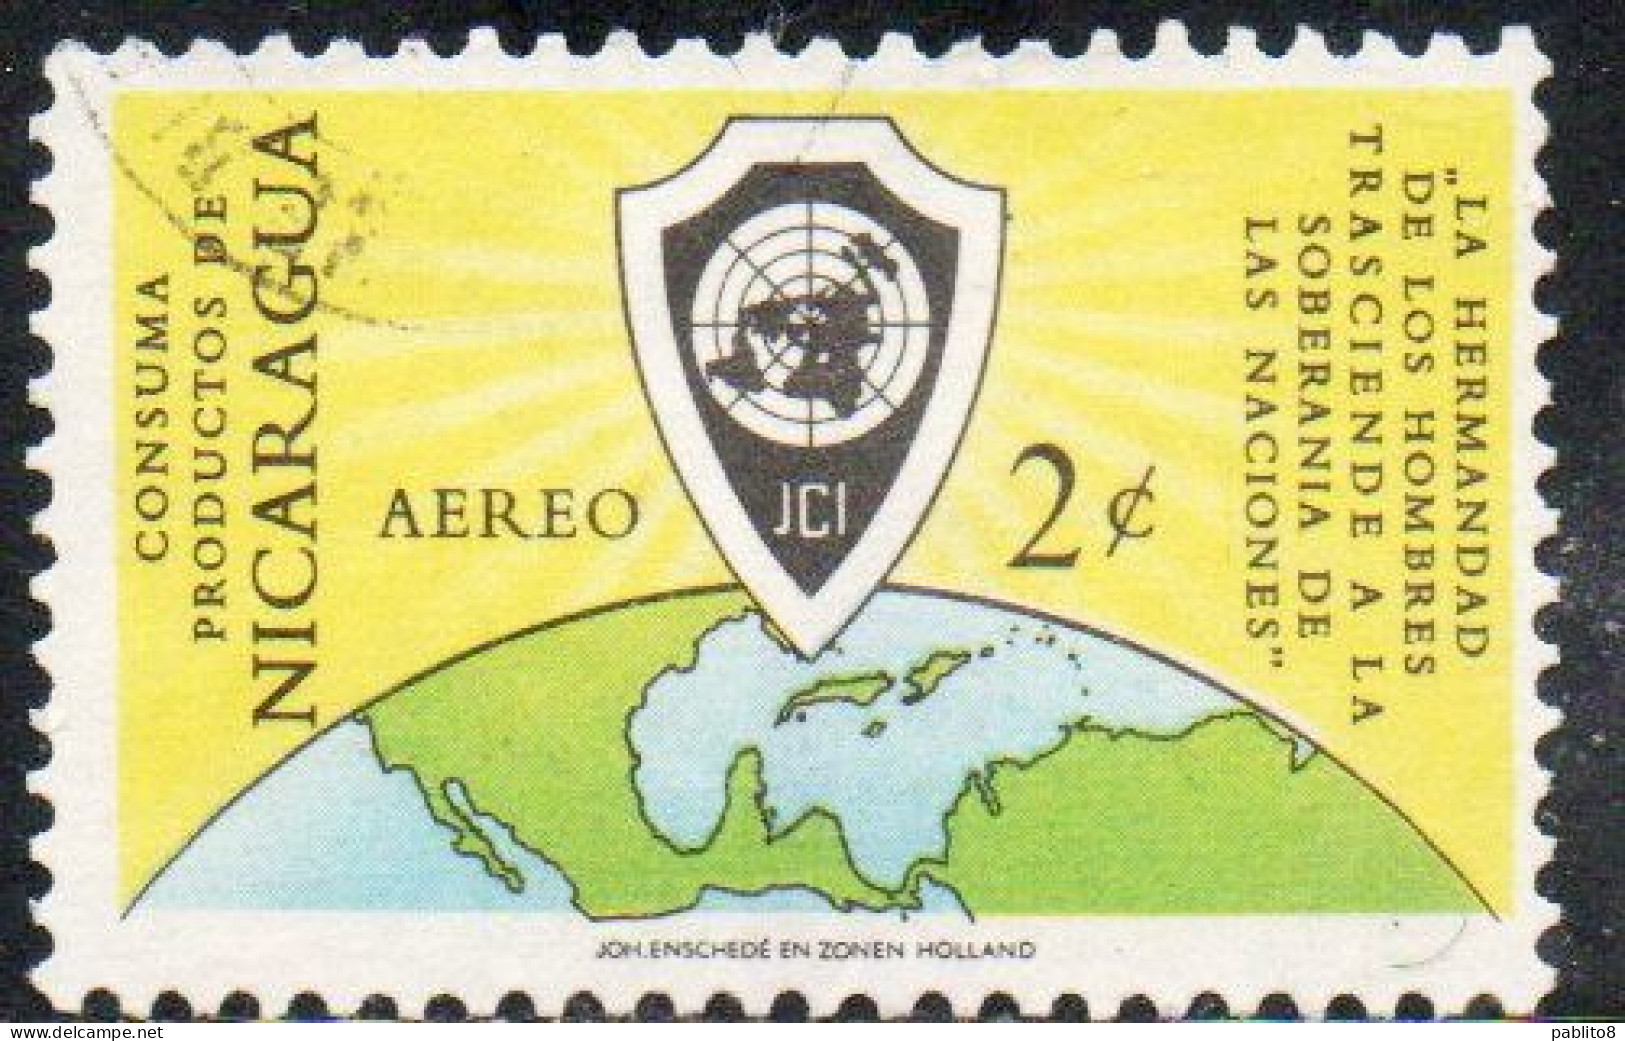 NICARAGUA 1961 JCI JUNIOR CHAMBER OF COMMERCE EMBLEM 2c USED USATO OBLITERE' - Nicaragua